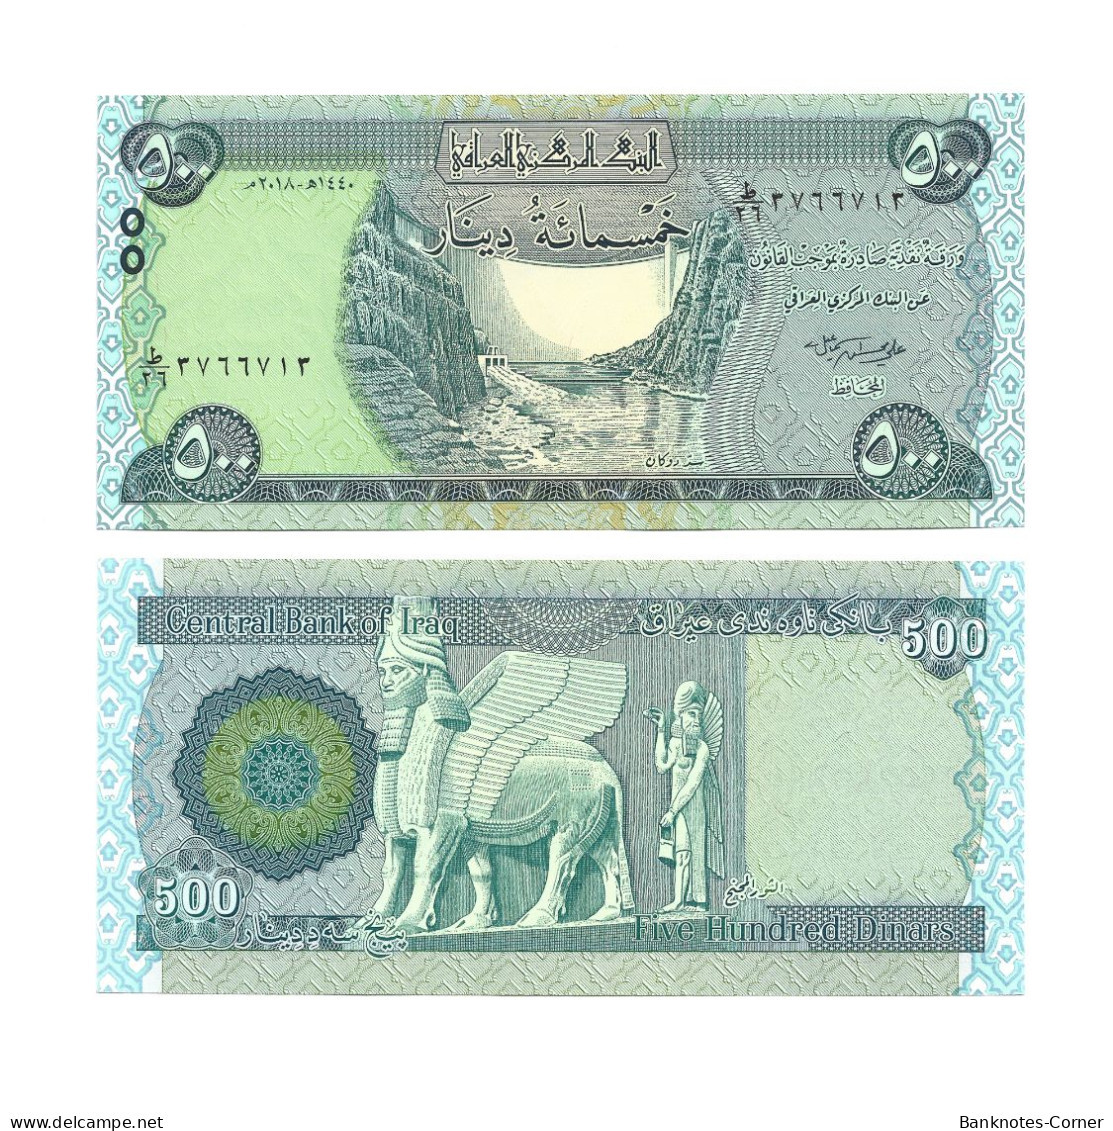 Irak Iraq Dinar banknotes complete set